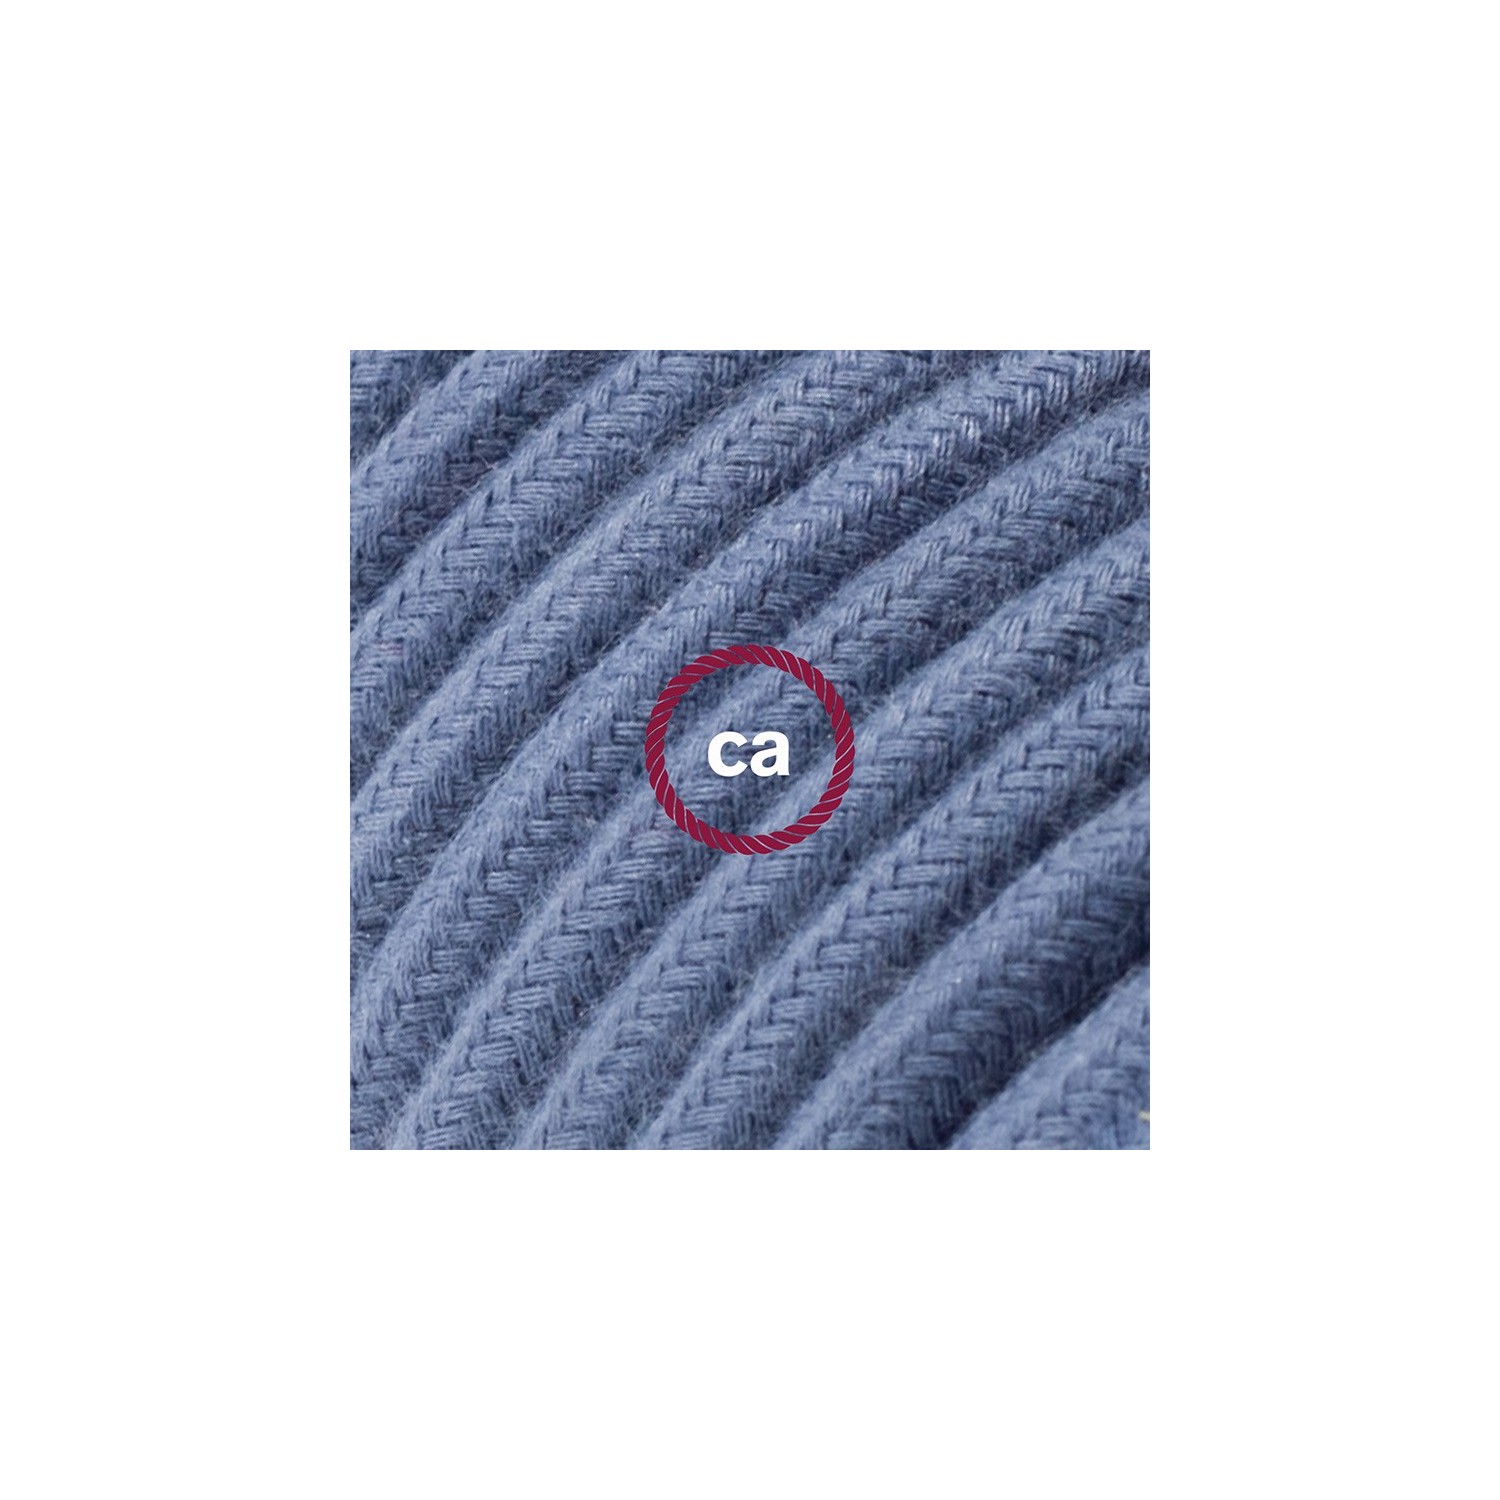 Posaluce en metal cromado con pantalla cilíndrica Cinette Azul Petroleo, cable textil, interruptor y clavija bipolar